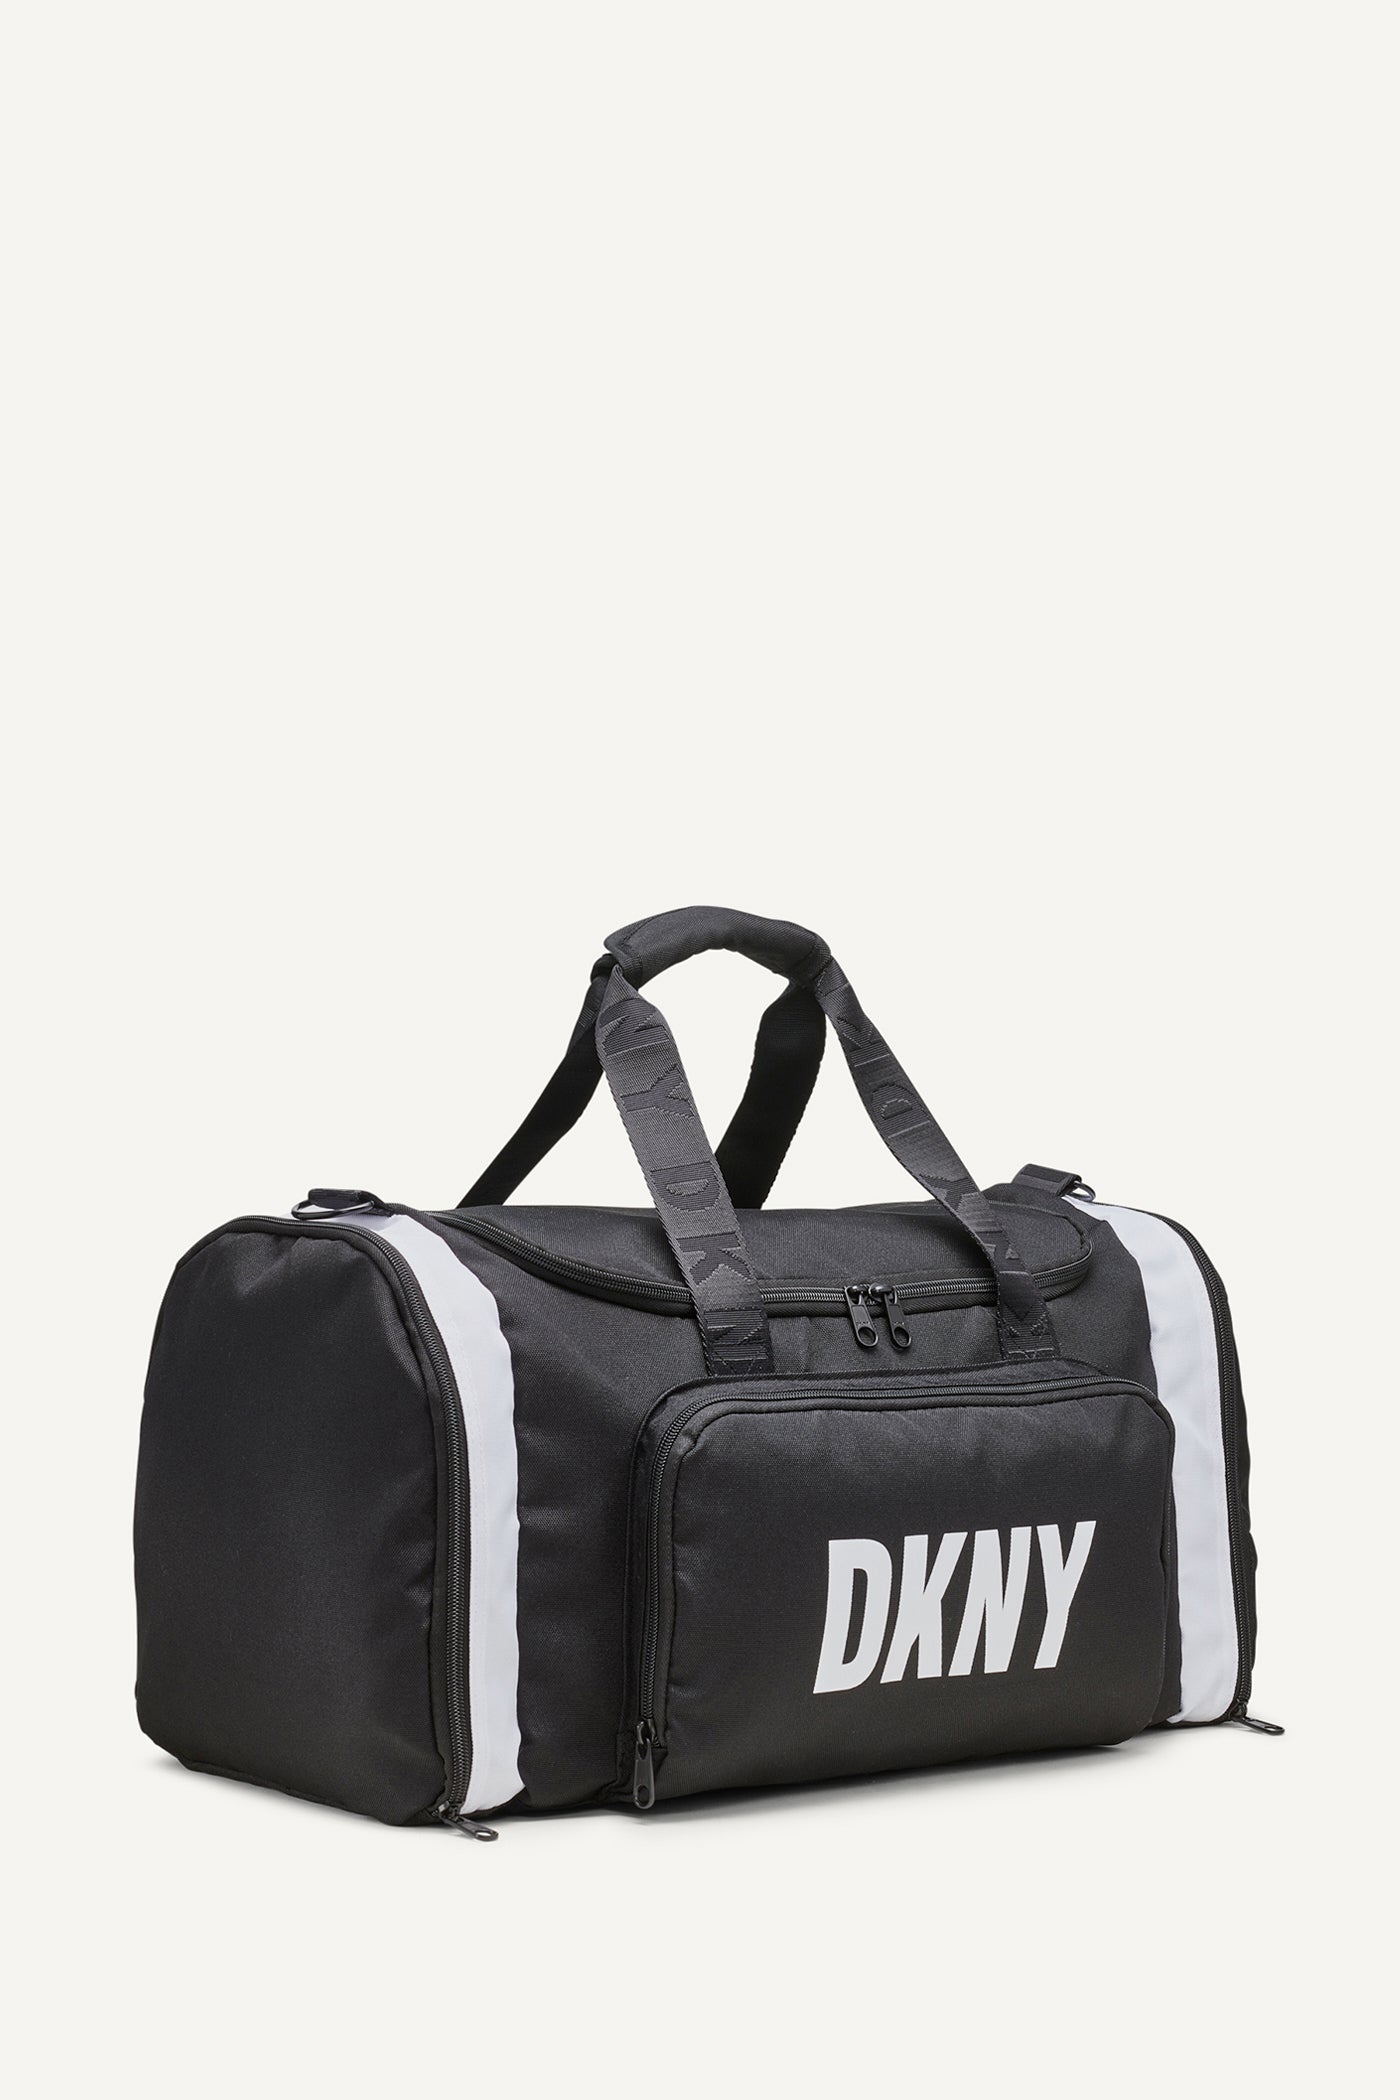 DKNY DUFFLE BAG